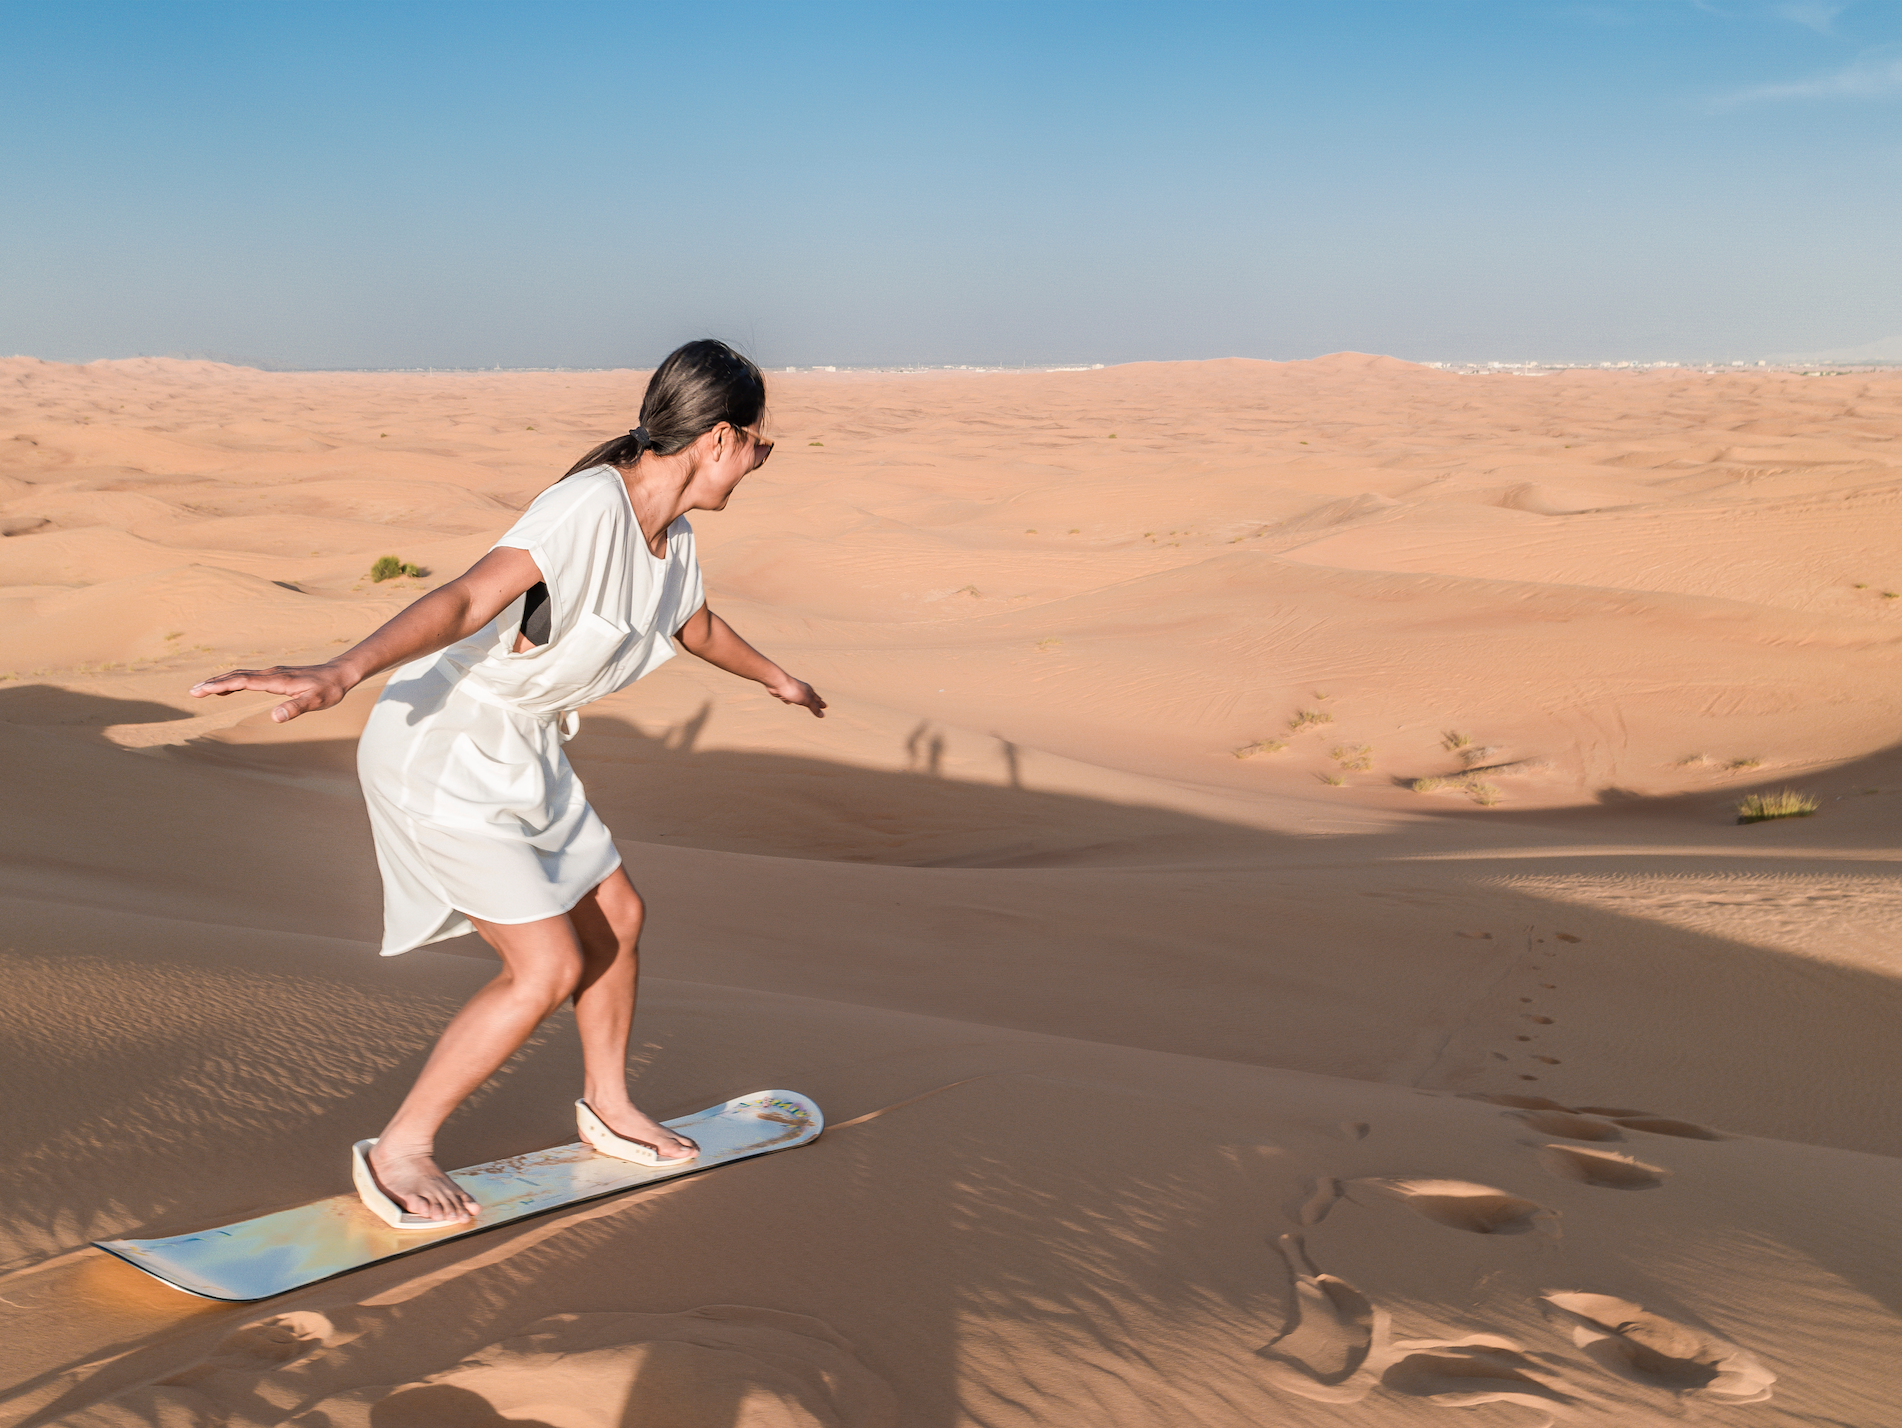 a woman sandboarding on a sand dune